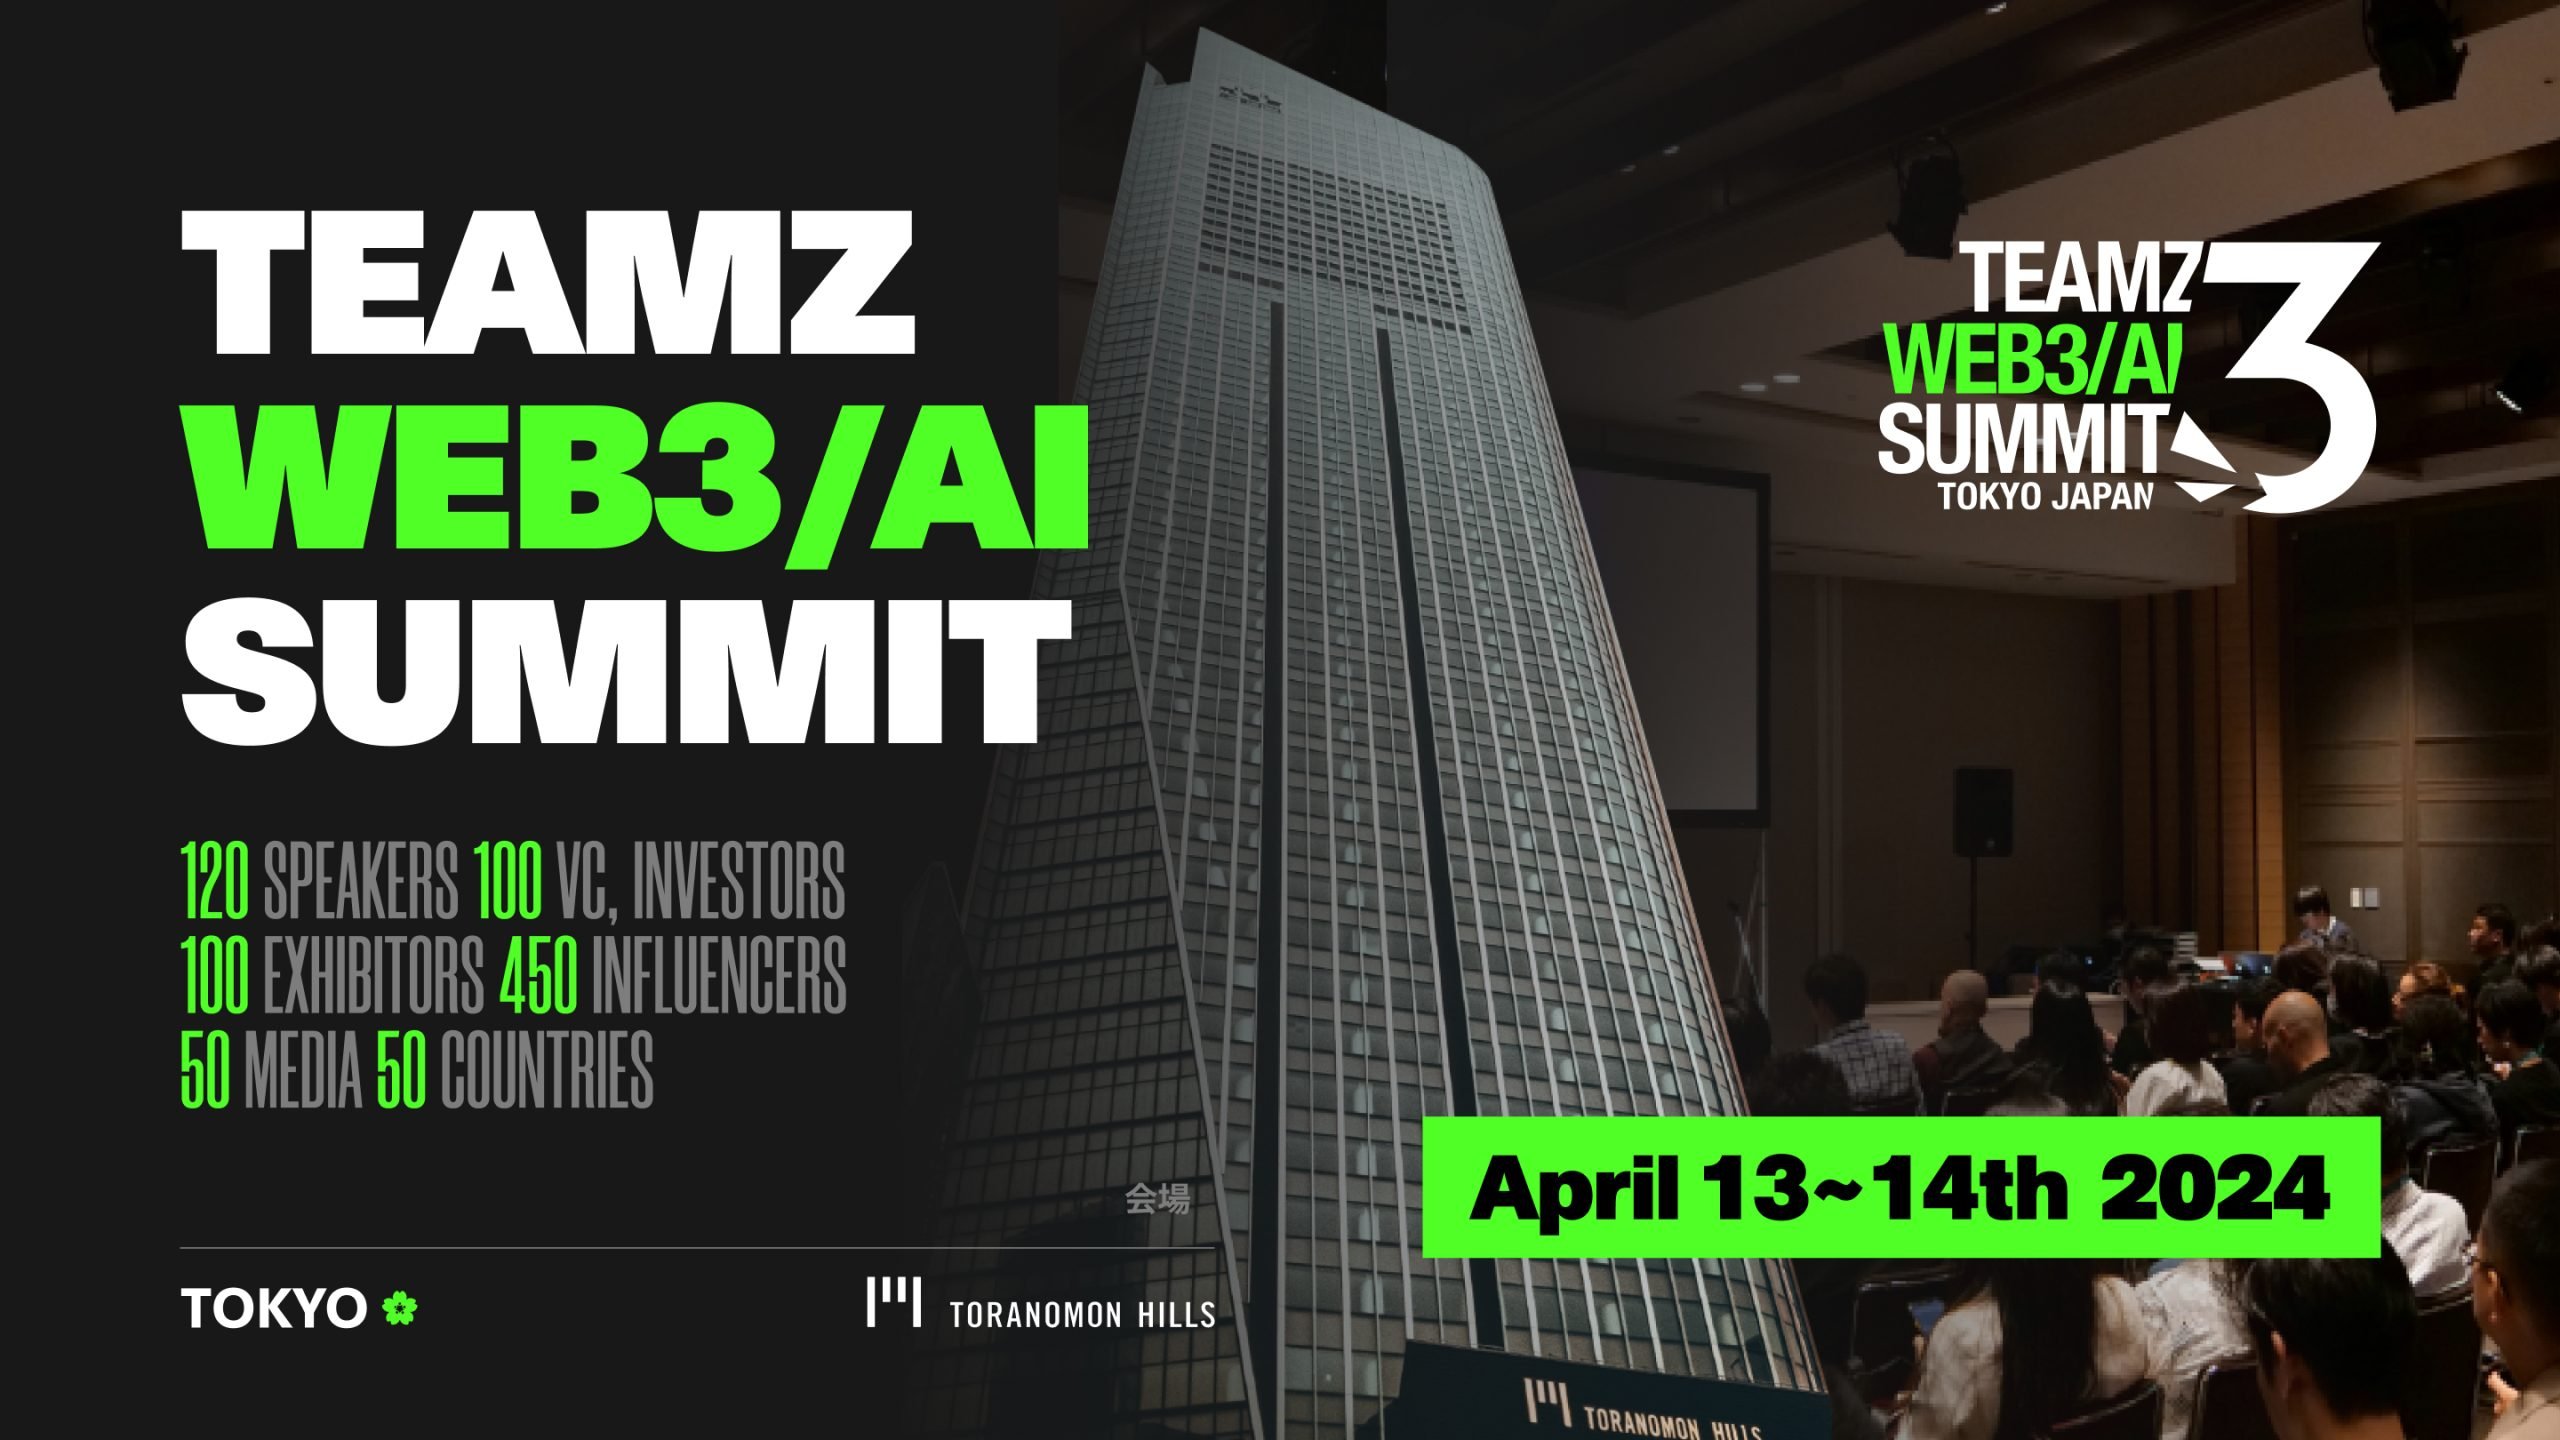 TEAMZ WEB3/AI Summit 2024: Japan’s Tech Spectacle on April 13-14 at Toranomon Hills